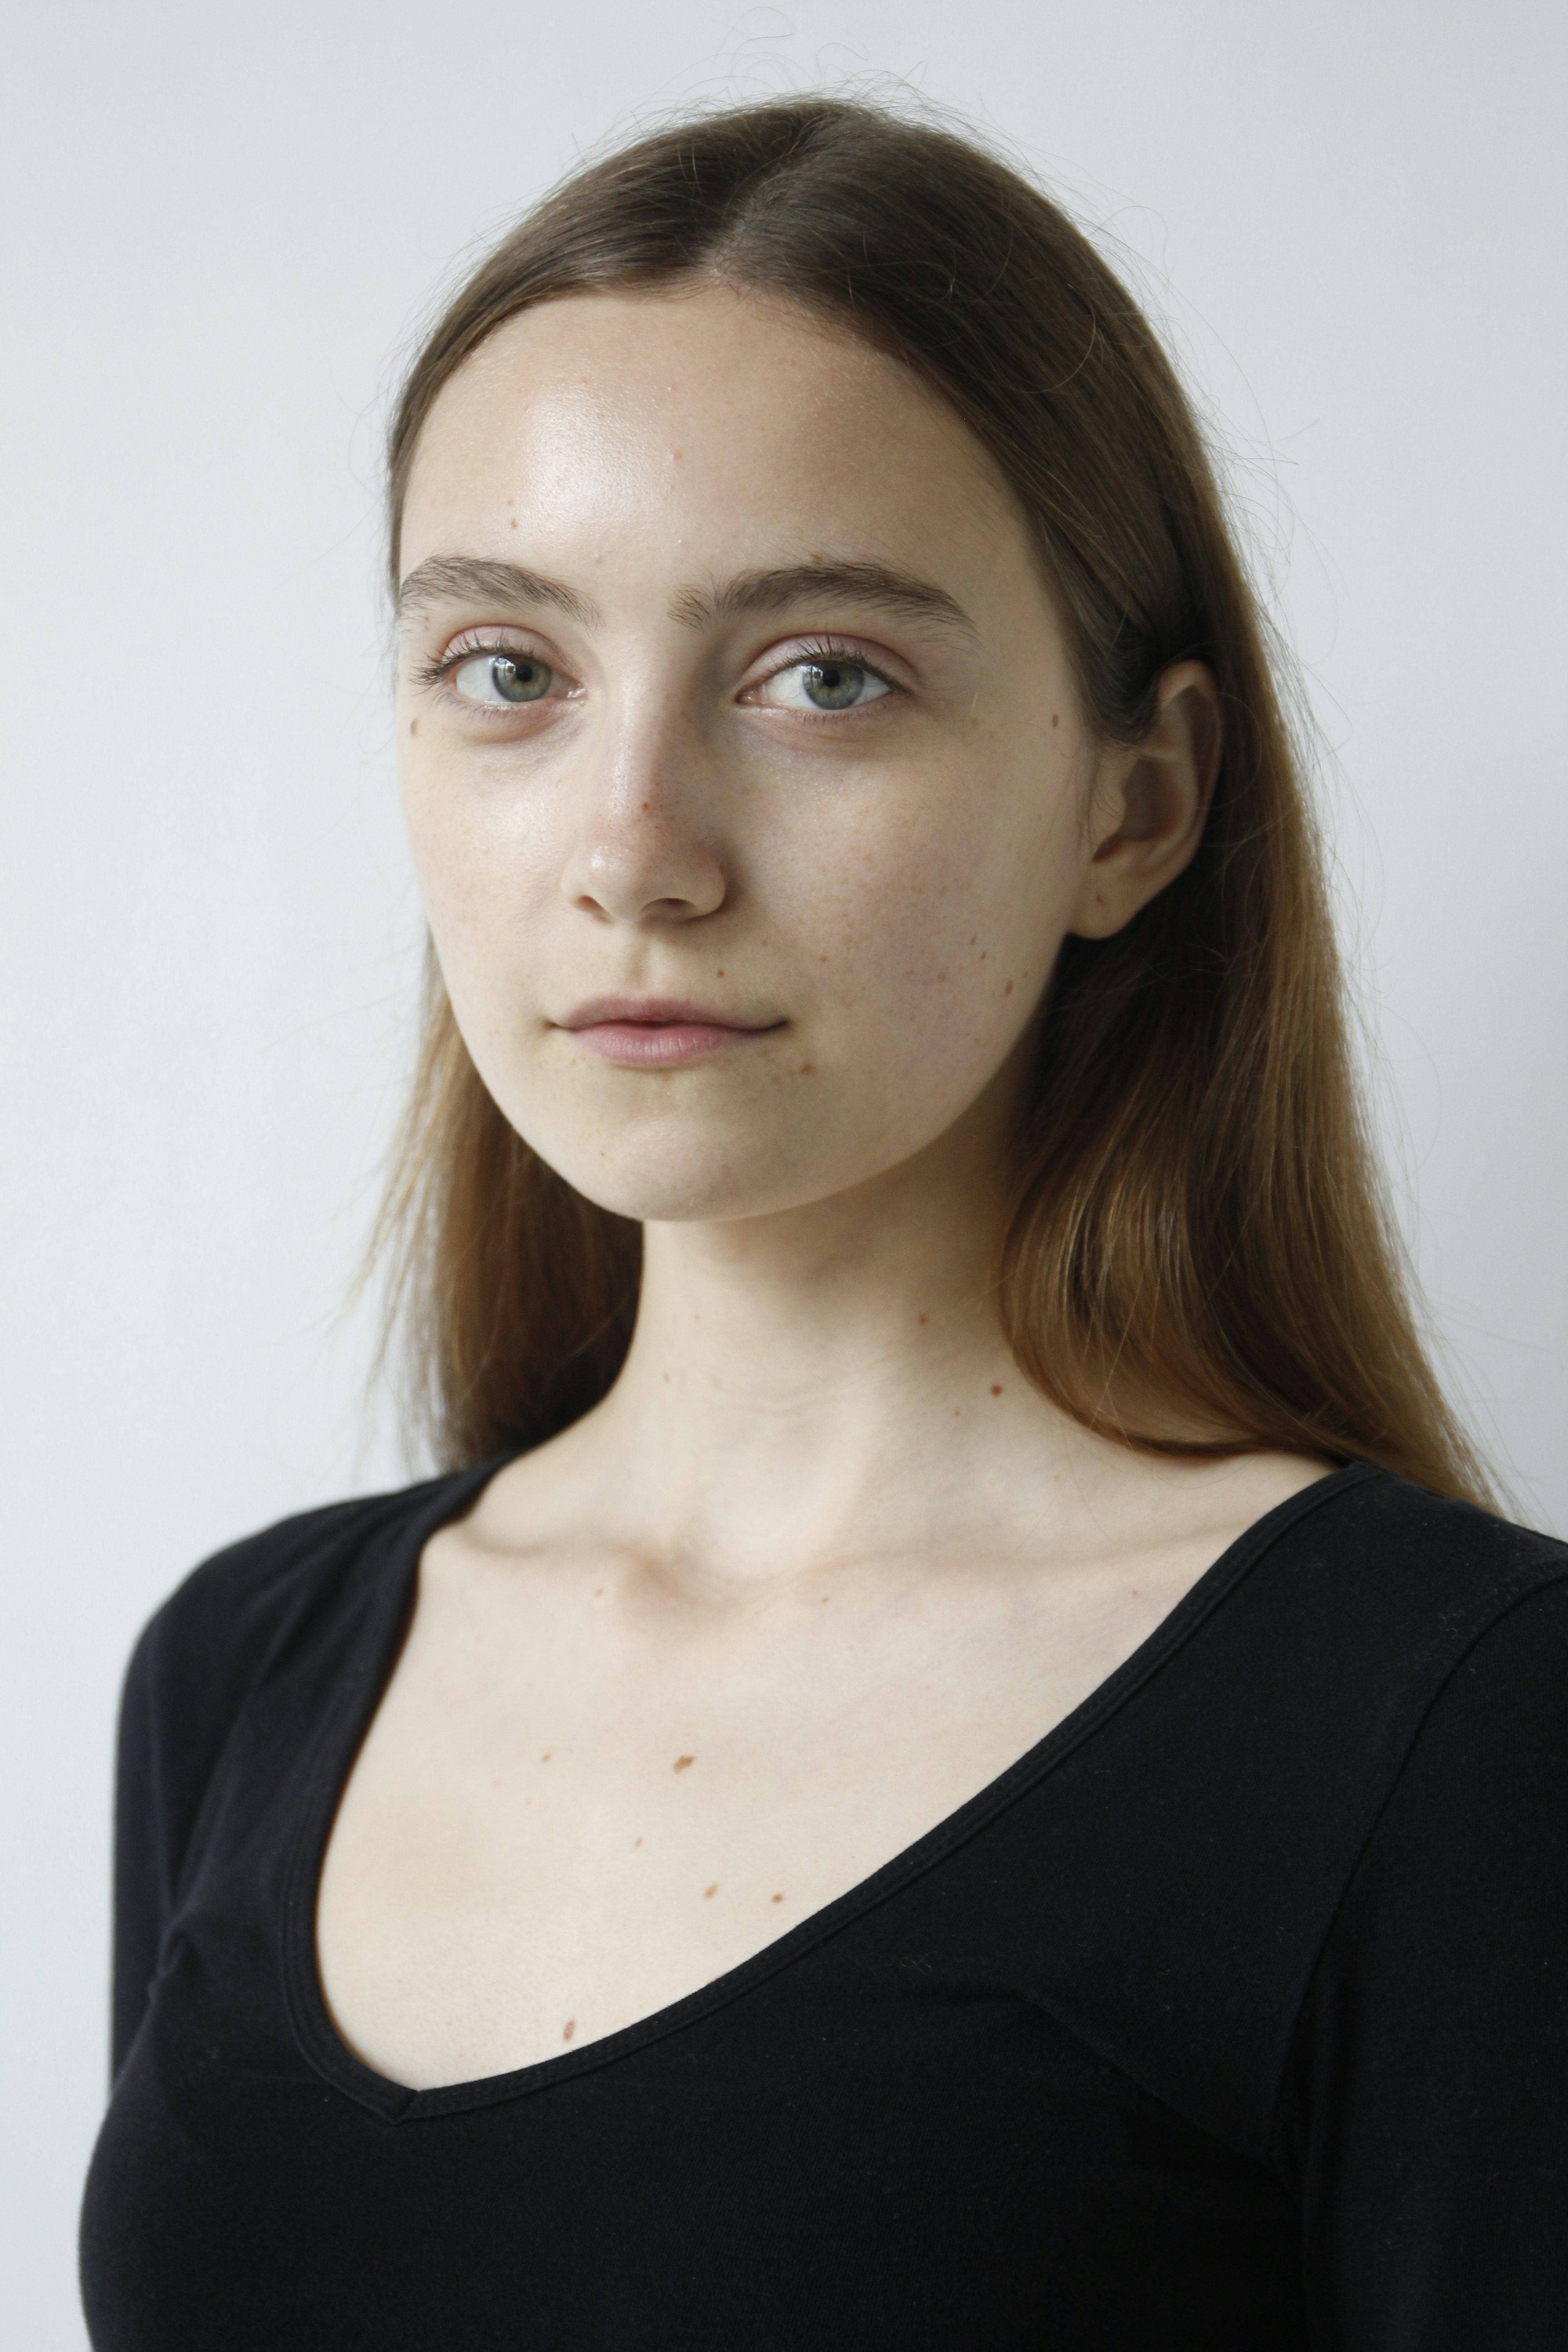 An image of Karolina Sakowicz